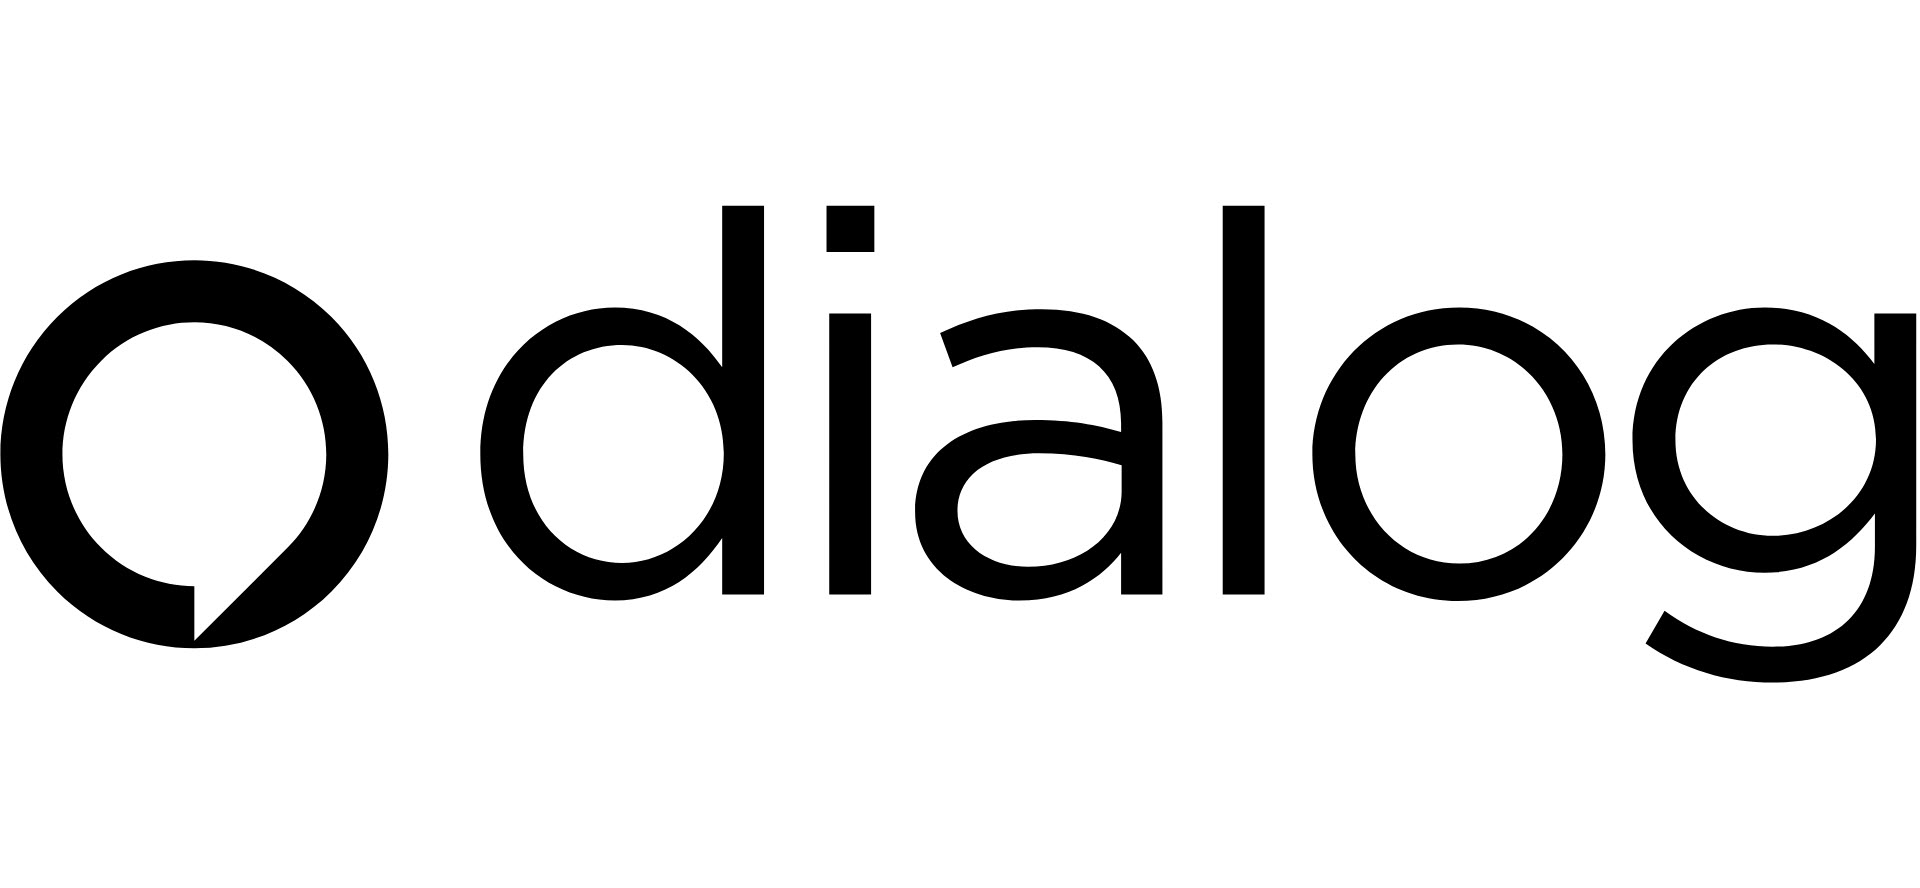 O dialog. Dialog мессенджер. Диалог логотип. Dialog корпоративный мессенджер. Логотип компания диалог.